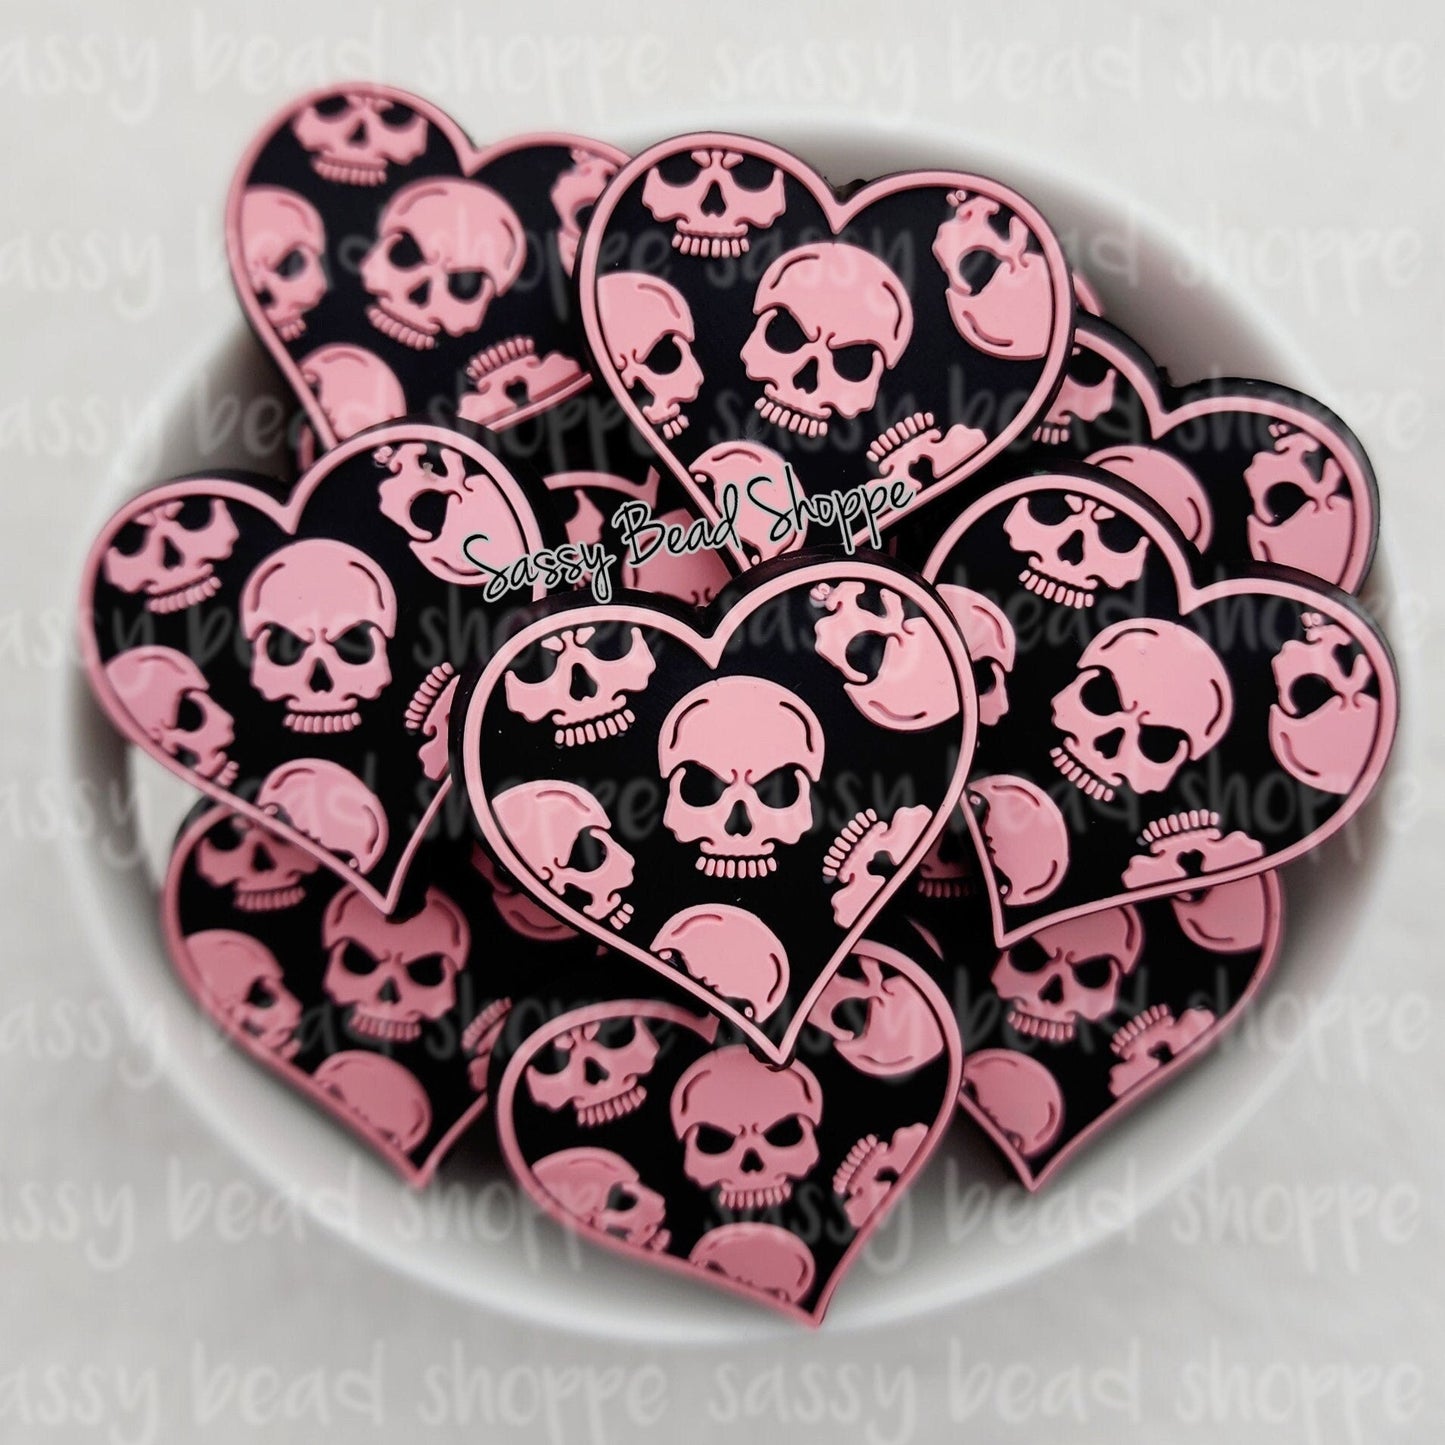 Sassy Bead Shoppe Pink Skull Heart Focal Bead